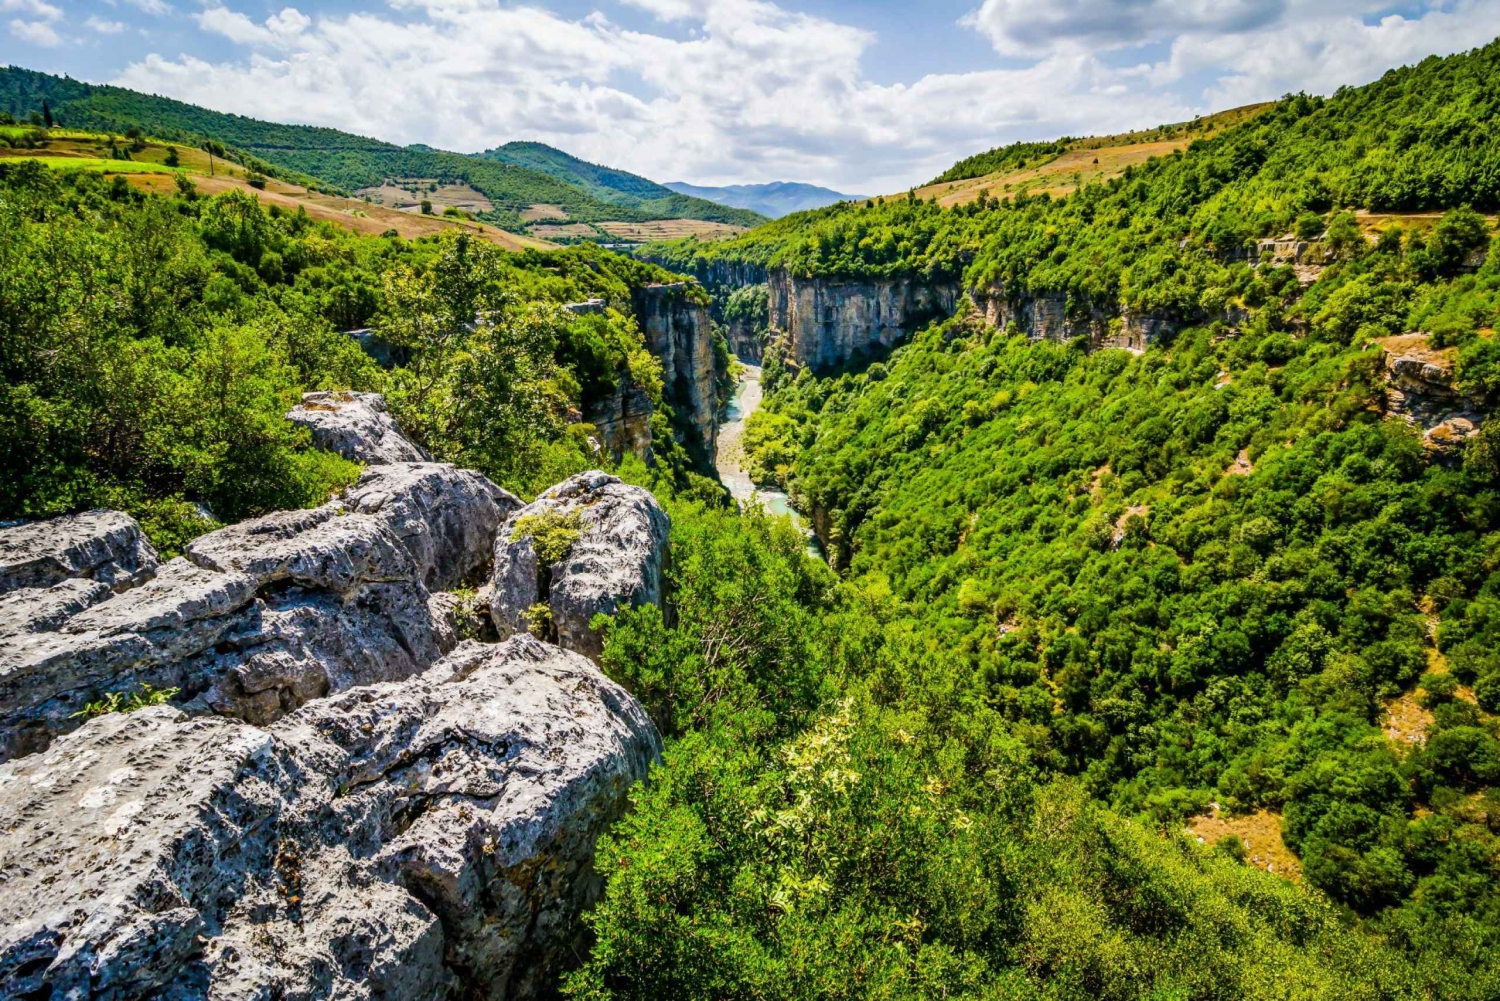 Visit Pirogoshi Cave from Berat